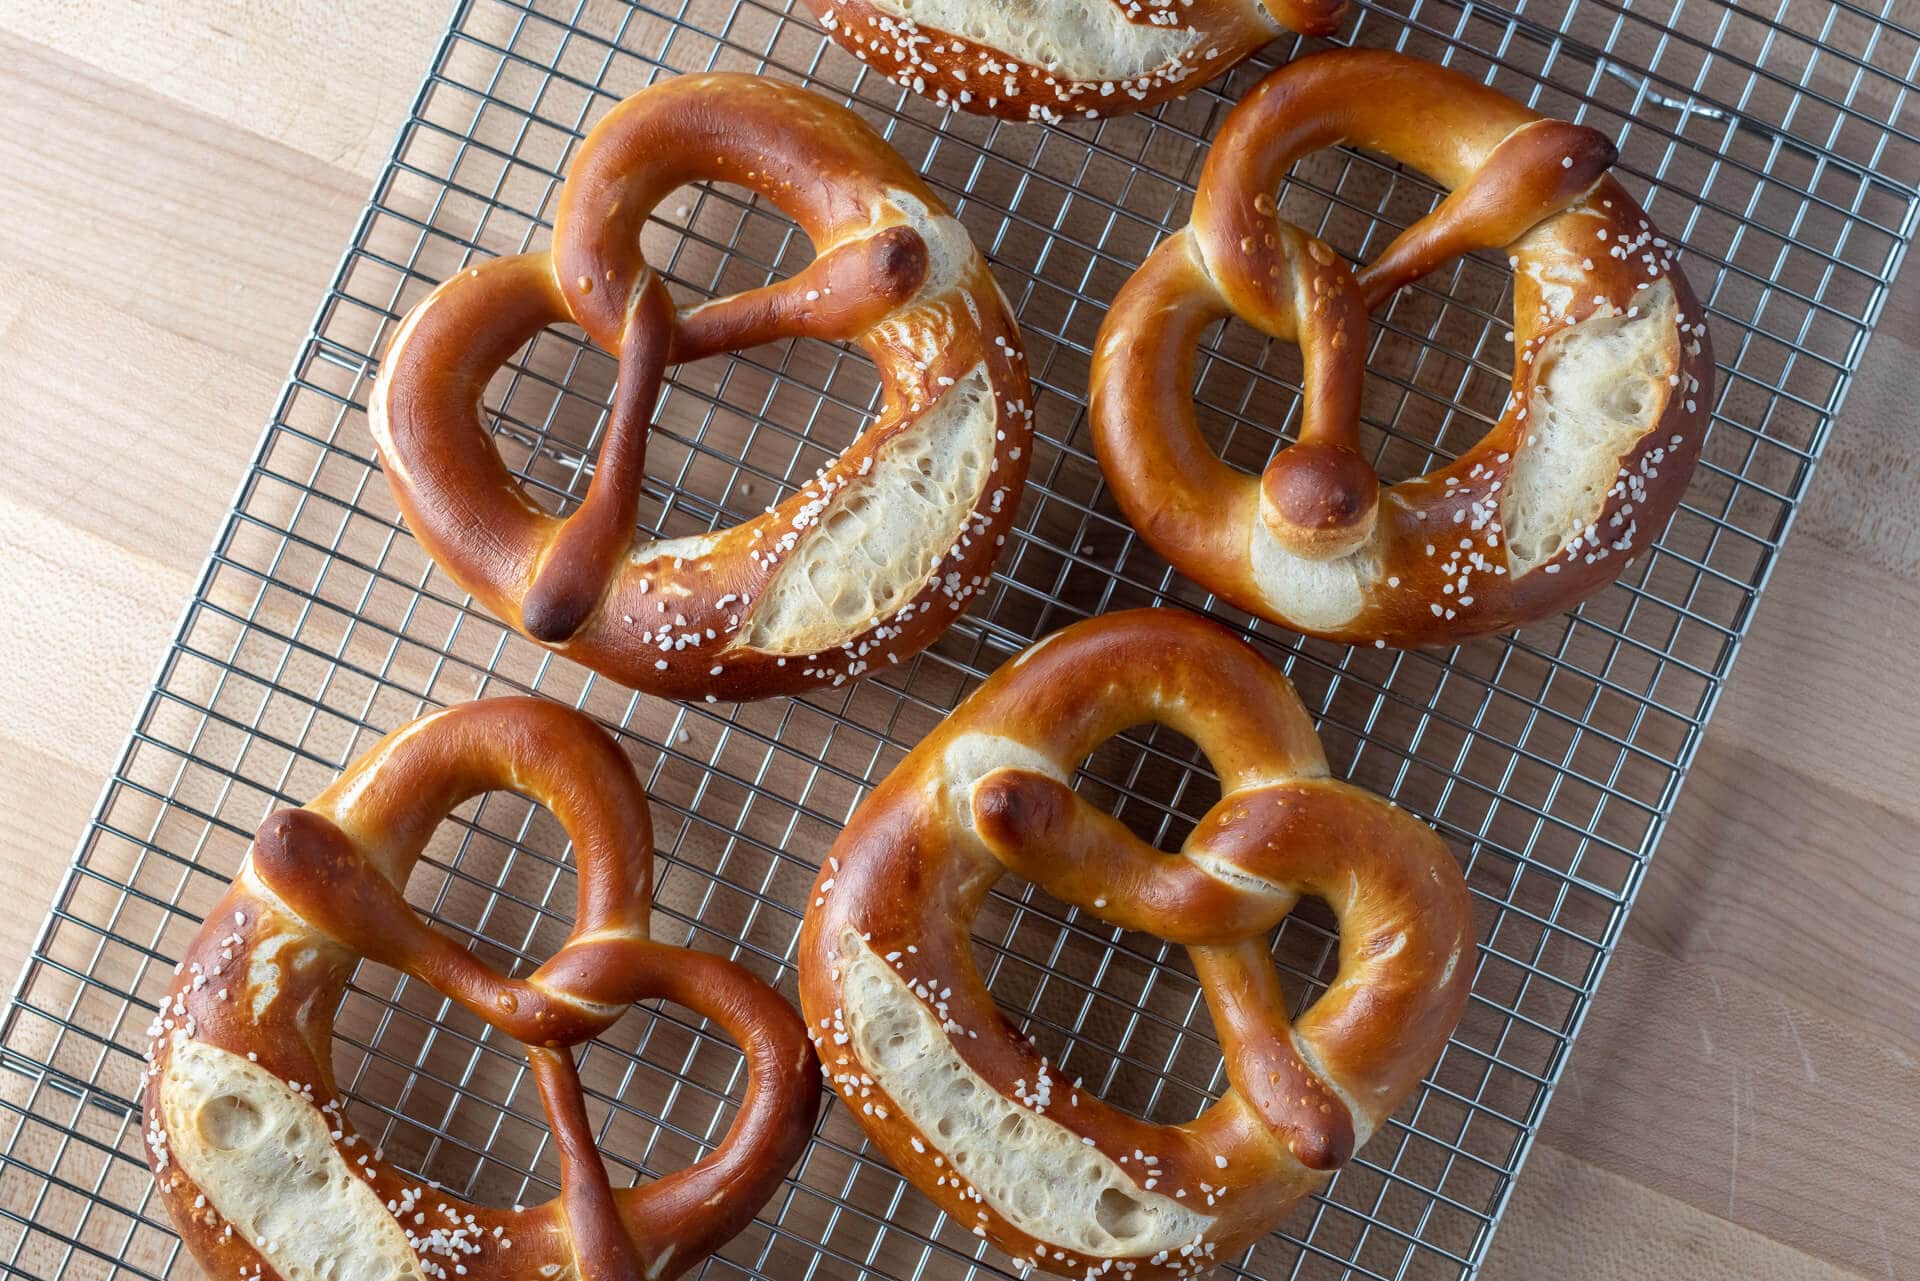 https://www.theperfectloaf.com/wp-content/uploads/2018/10/theperfectloaf-seriously-soft-sourdough-pretzel-baked-2.jpg